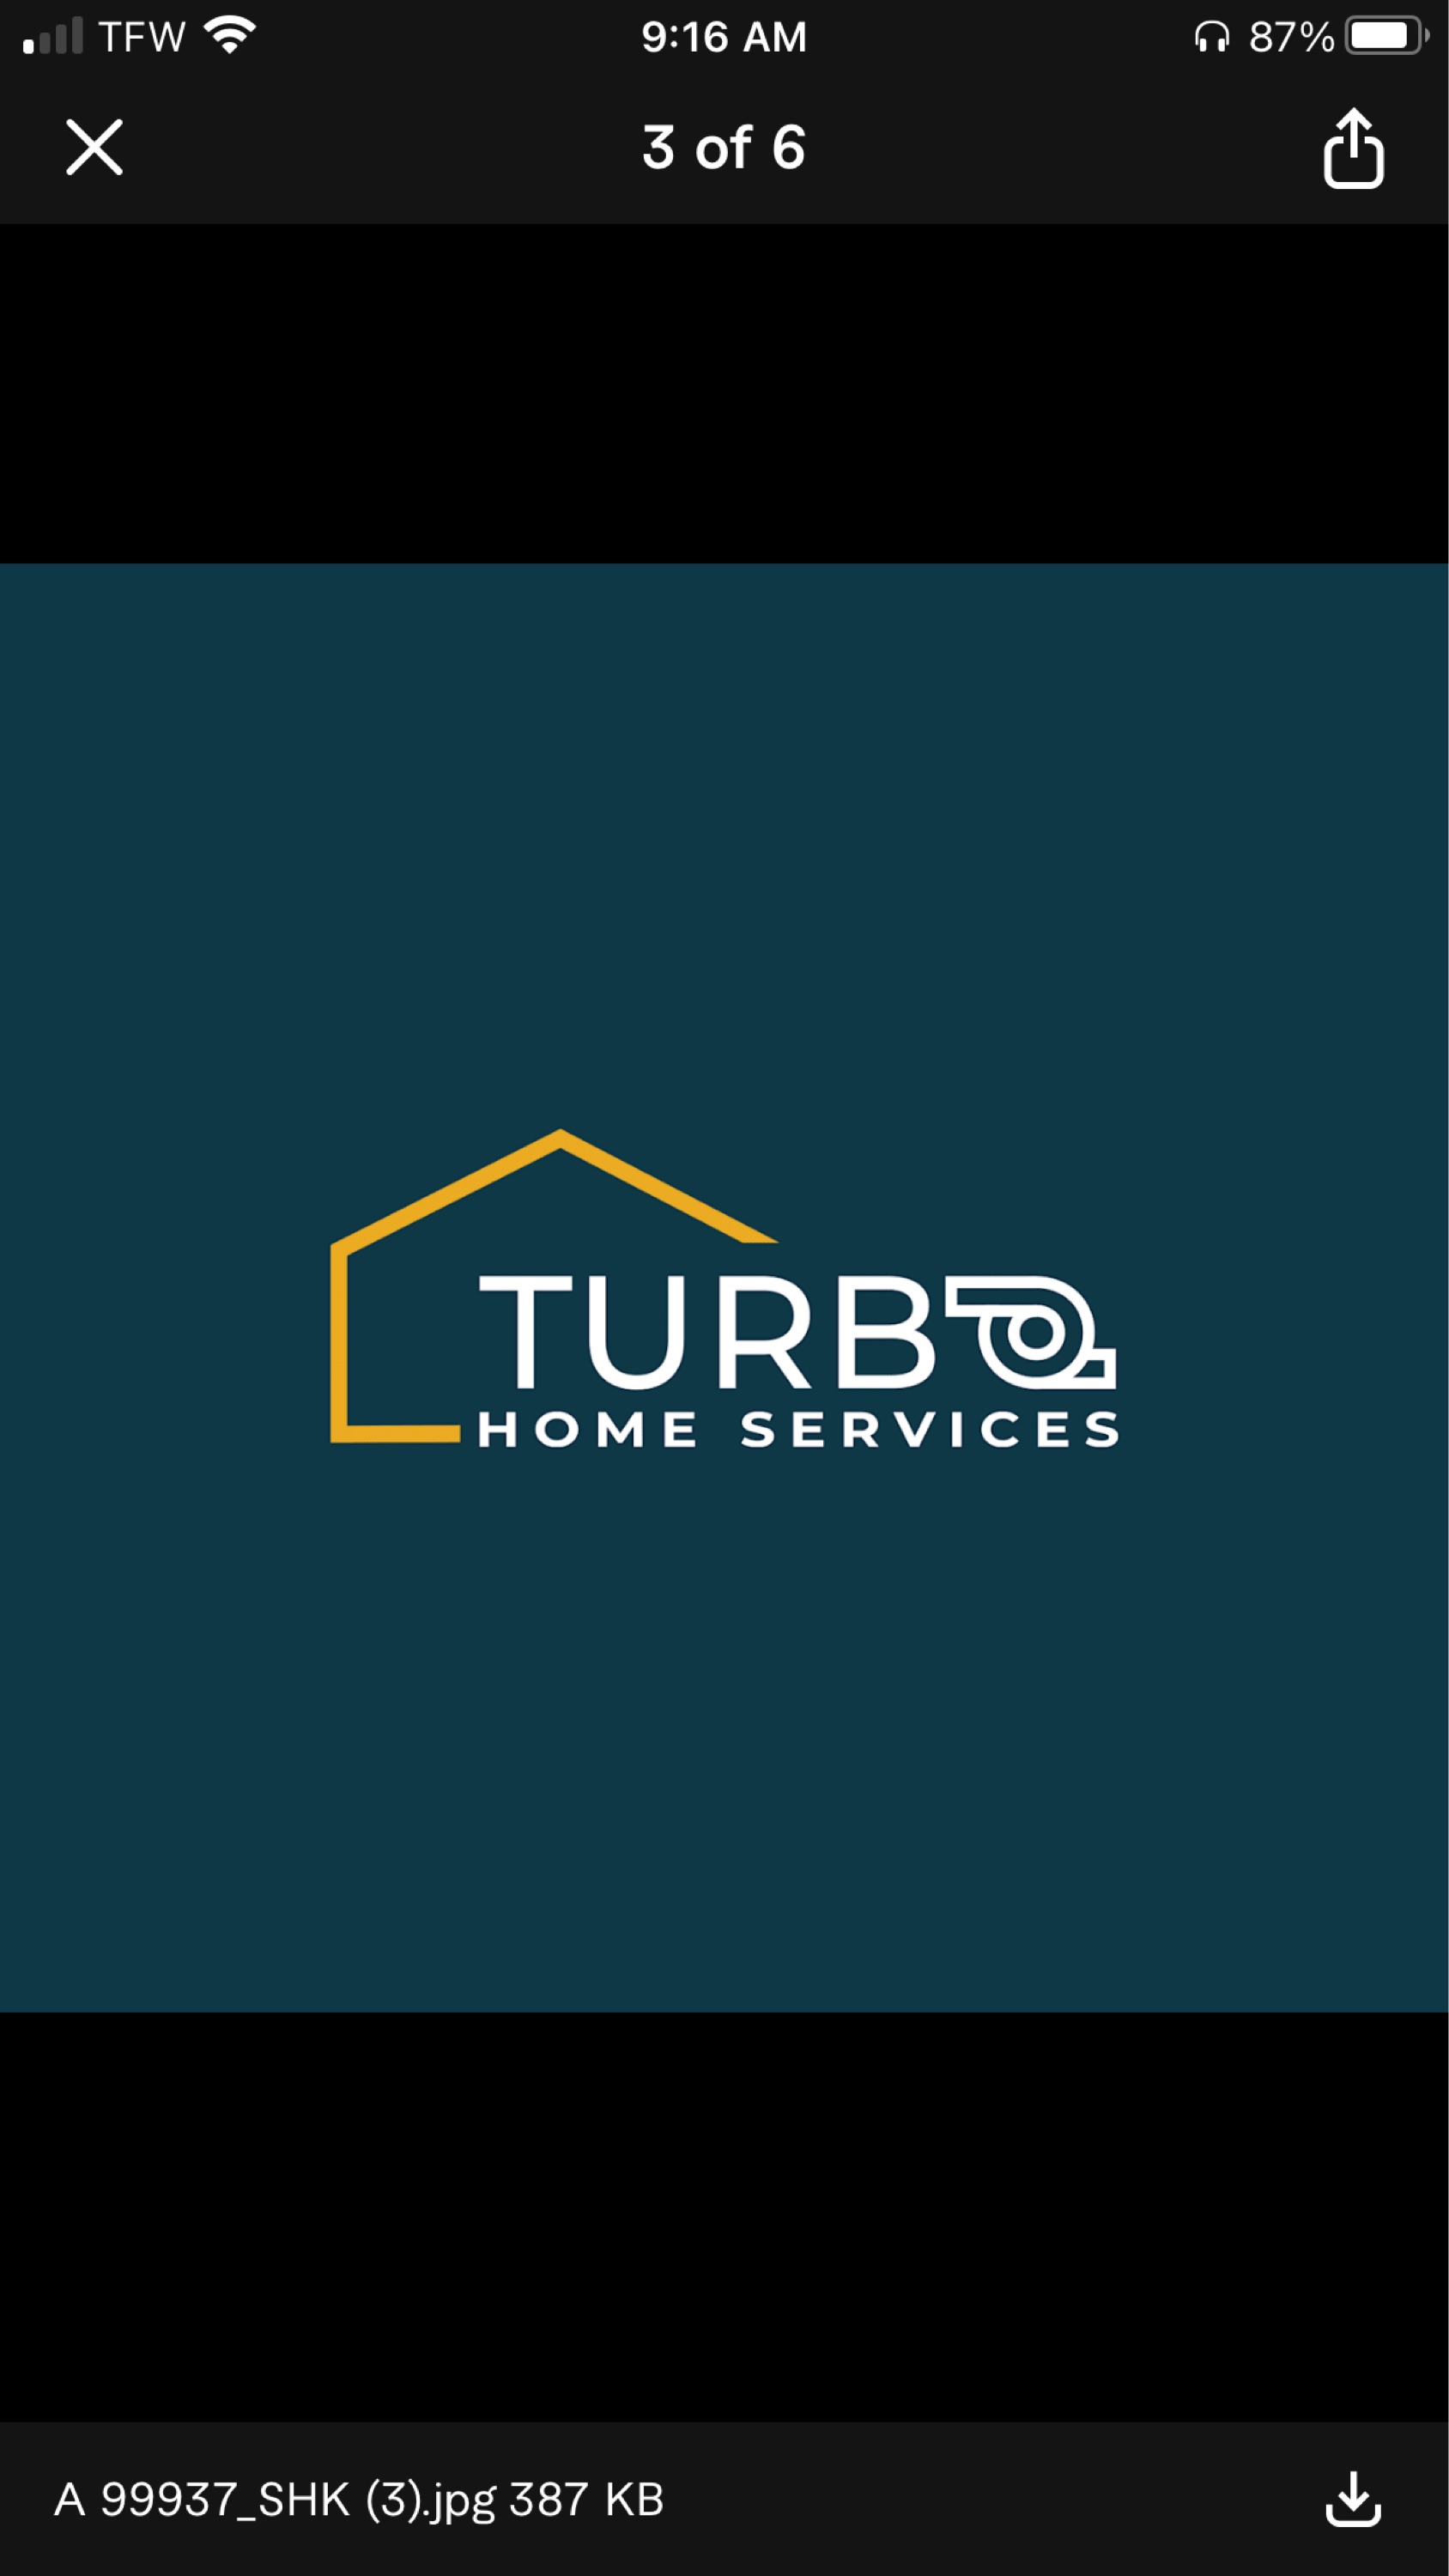 Turbo Home Services Logo